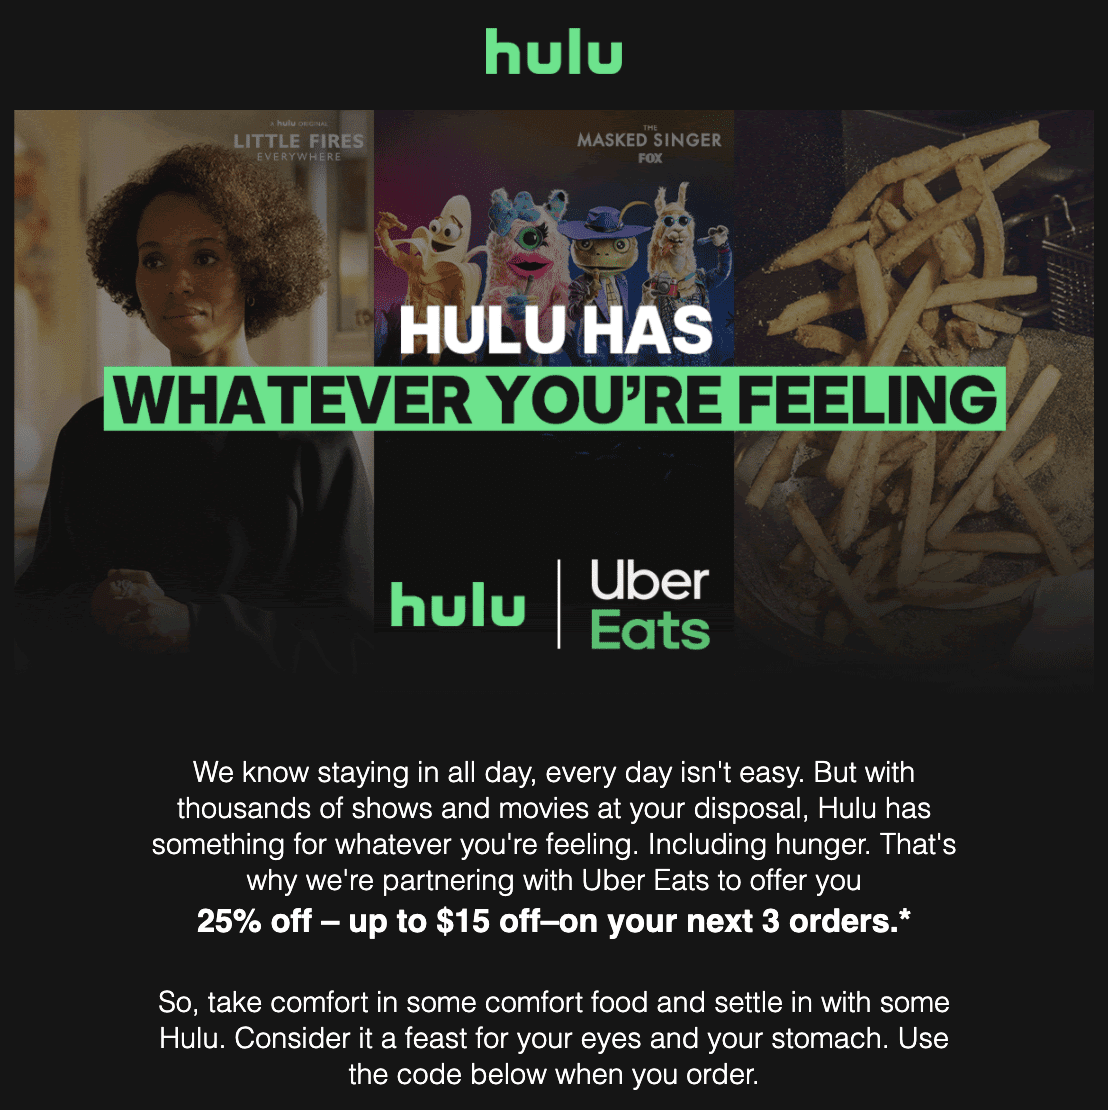 Hulu Uber eats poster